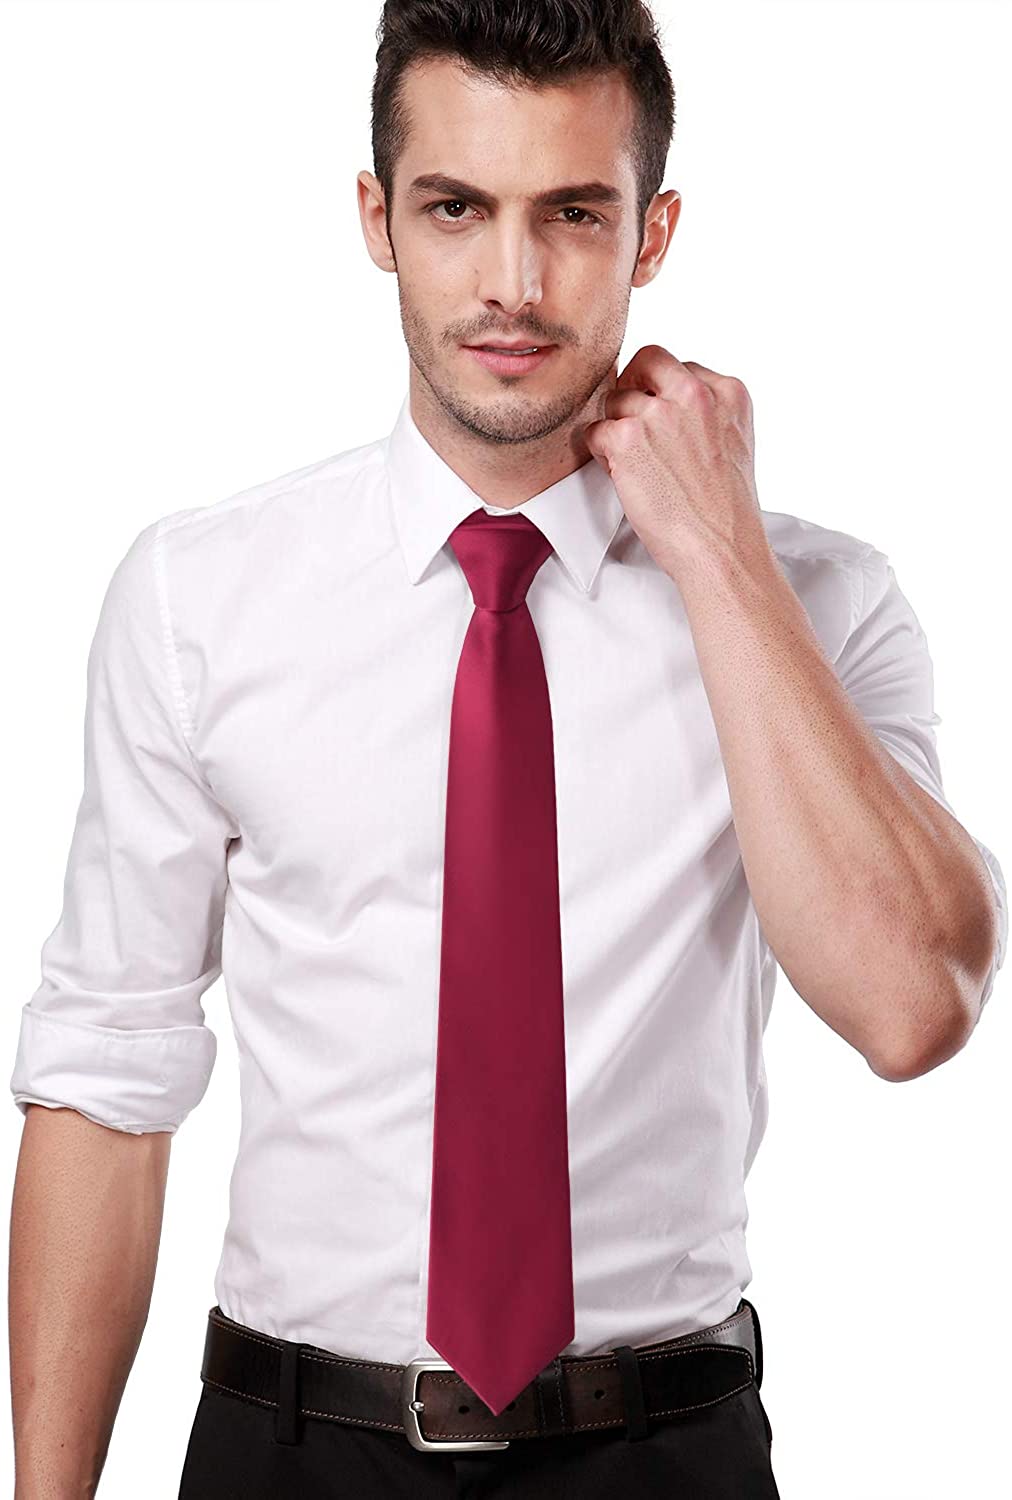 Landisun Skinny Tie Solid Tie Satin Tie Slim Tie Necktie Regular